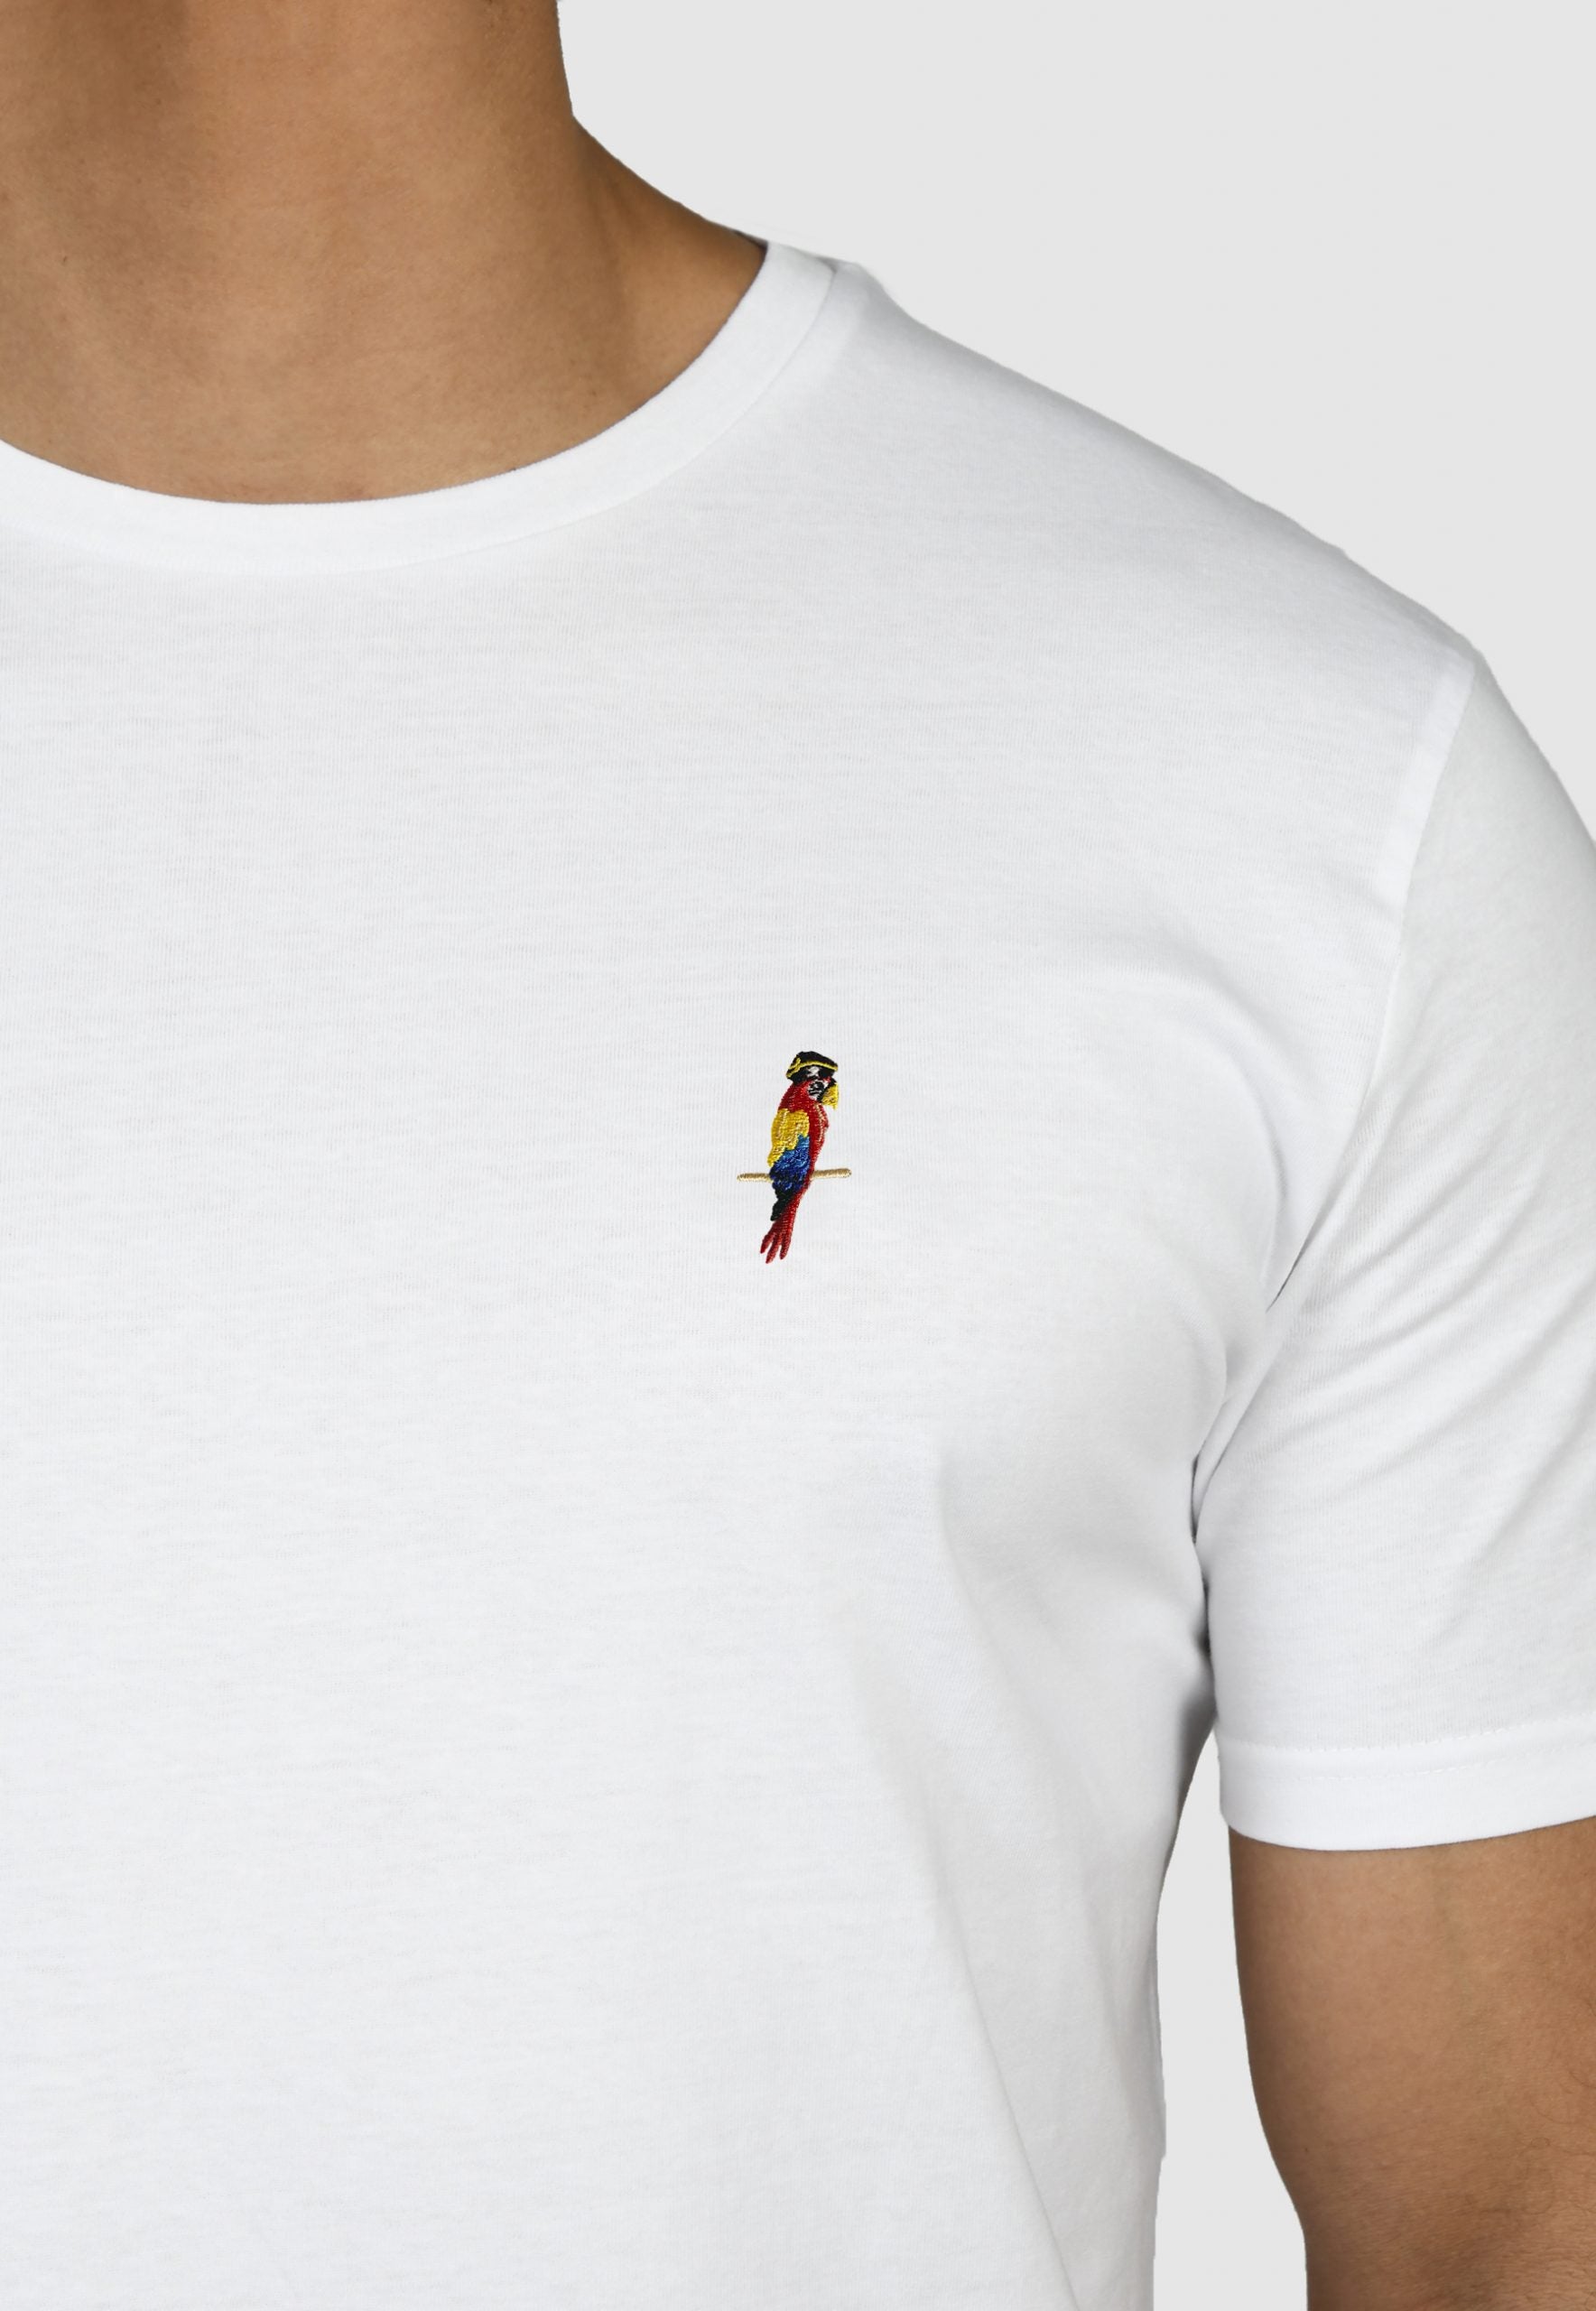 Parrot Swim Trunks & T-shirt Bundle